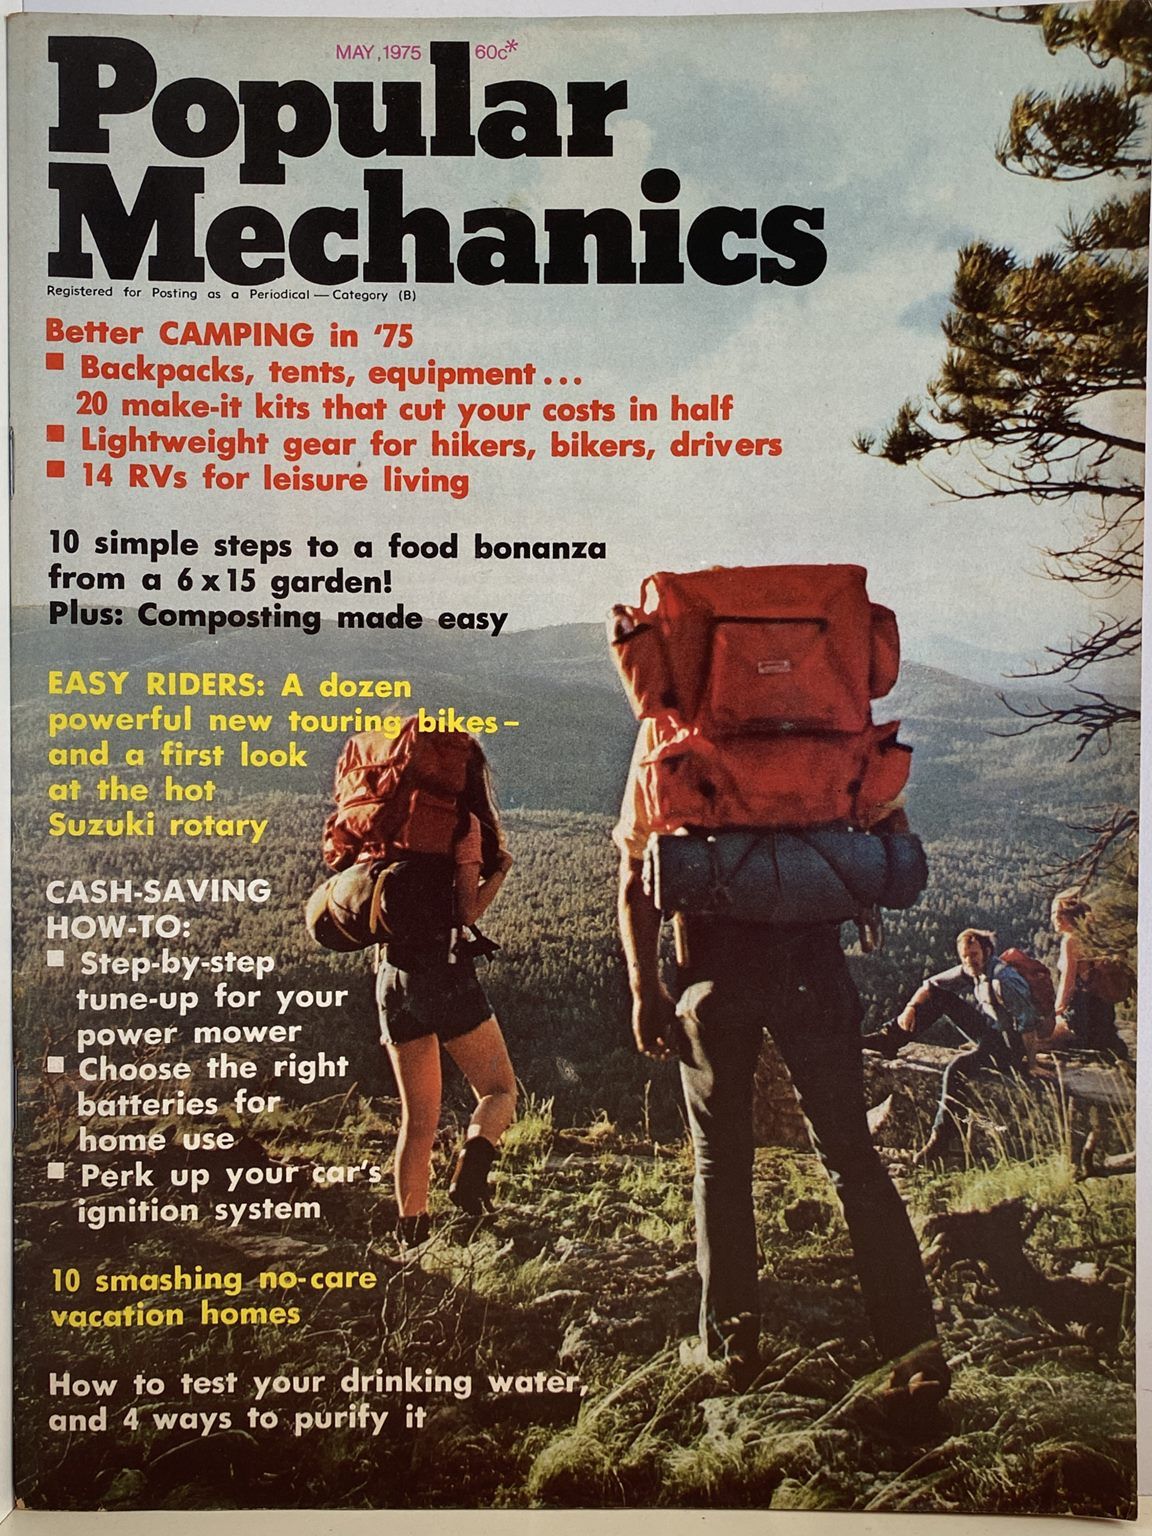 VINTAGE MAGAZINE: Popular Mechanics - Vol. 143, No. 3 - May 1975